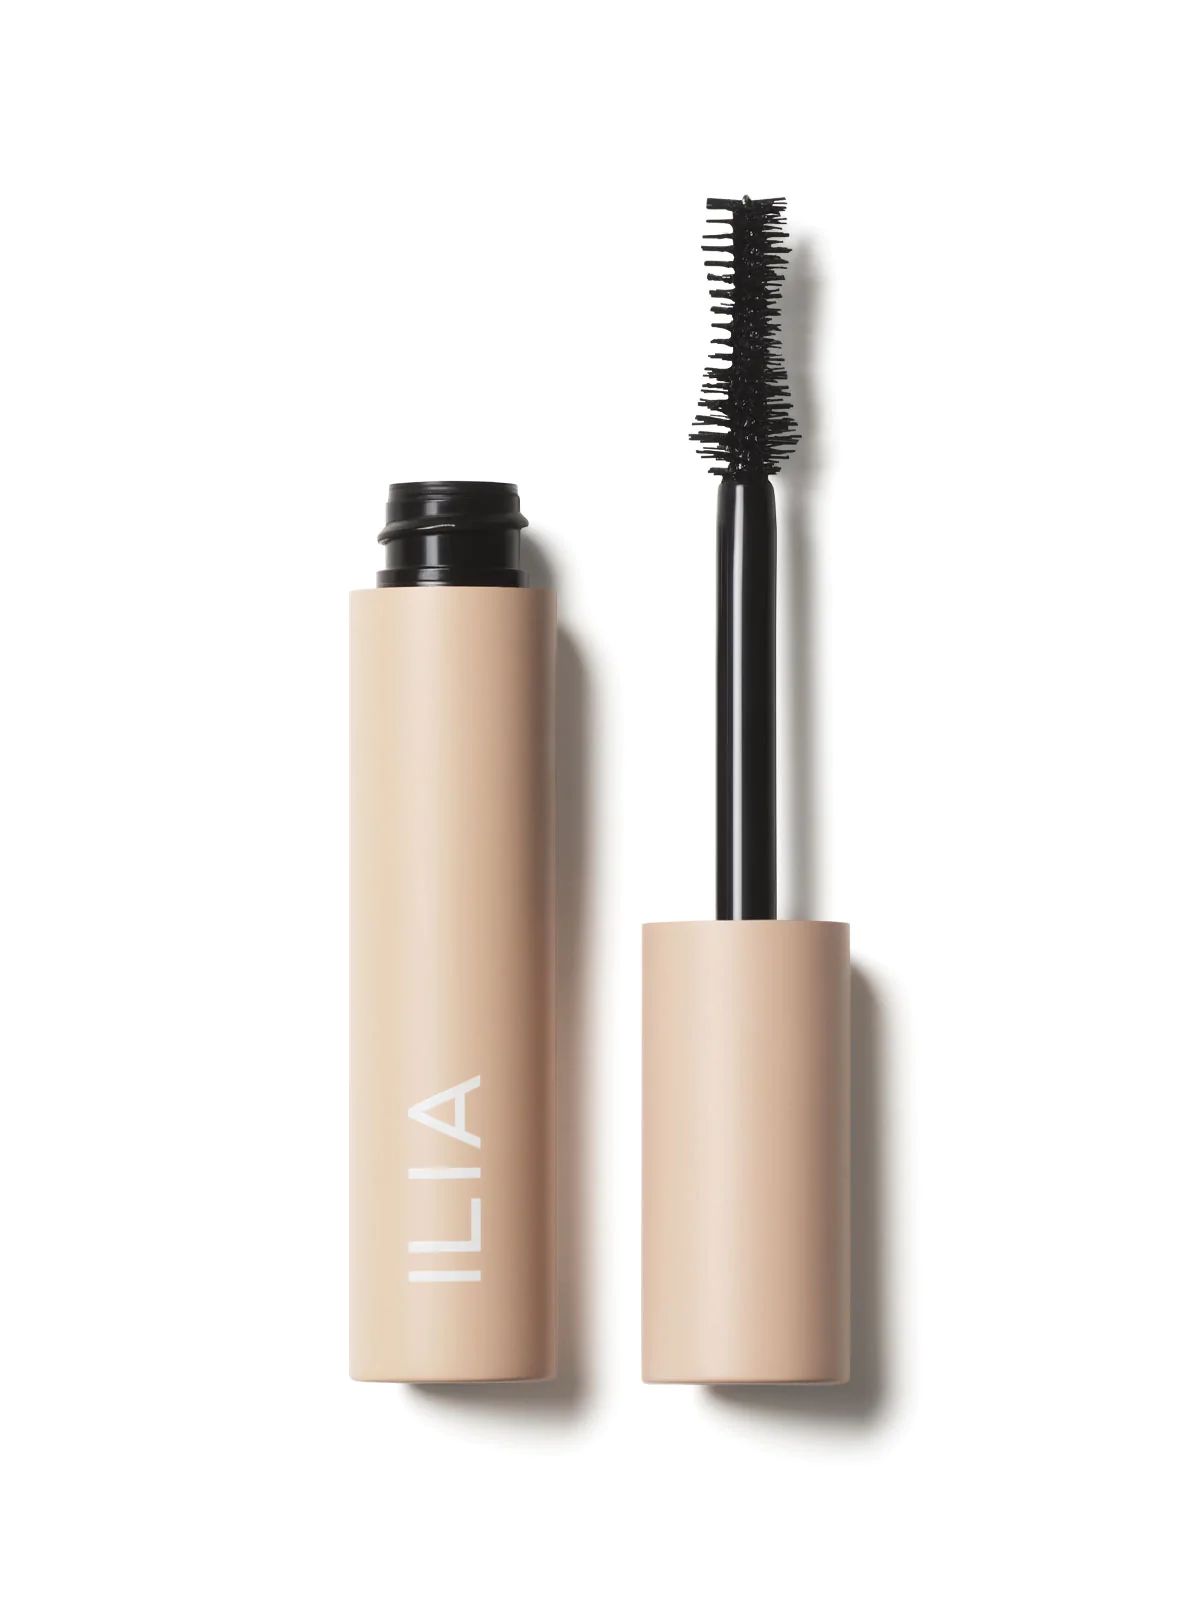 ILIA Fullest Volumizing Mascara - Clean Mascara | ILIA Beauty